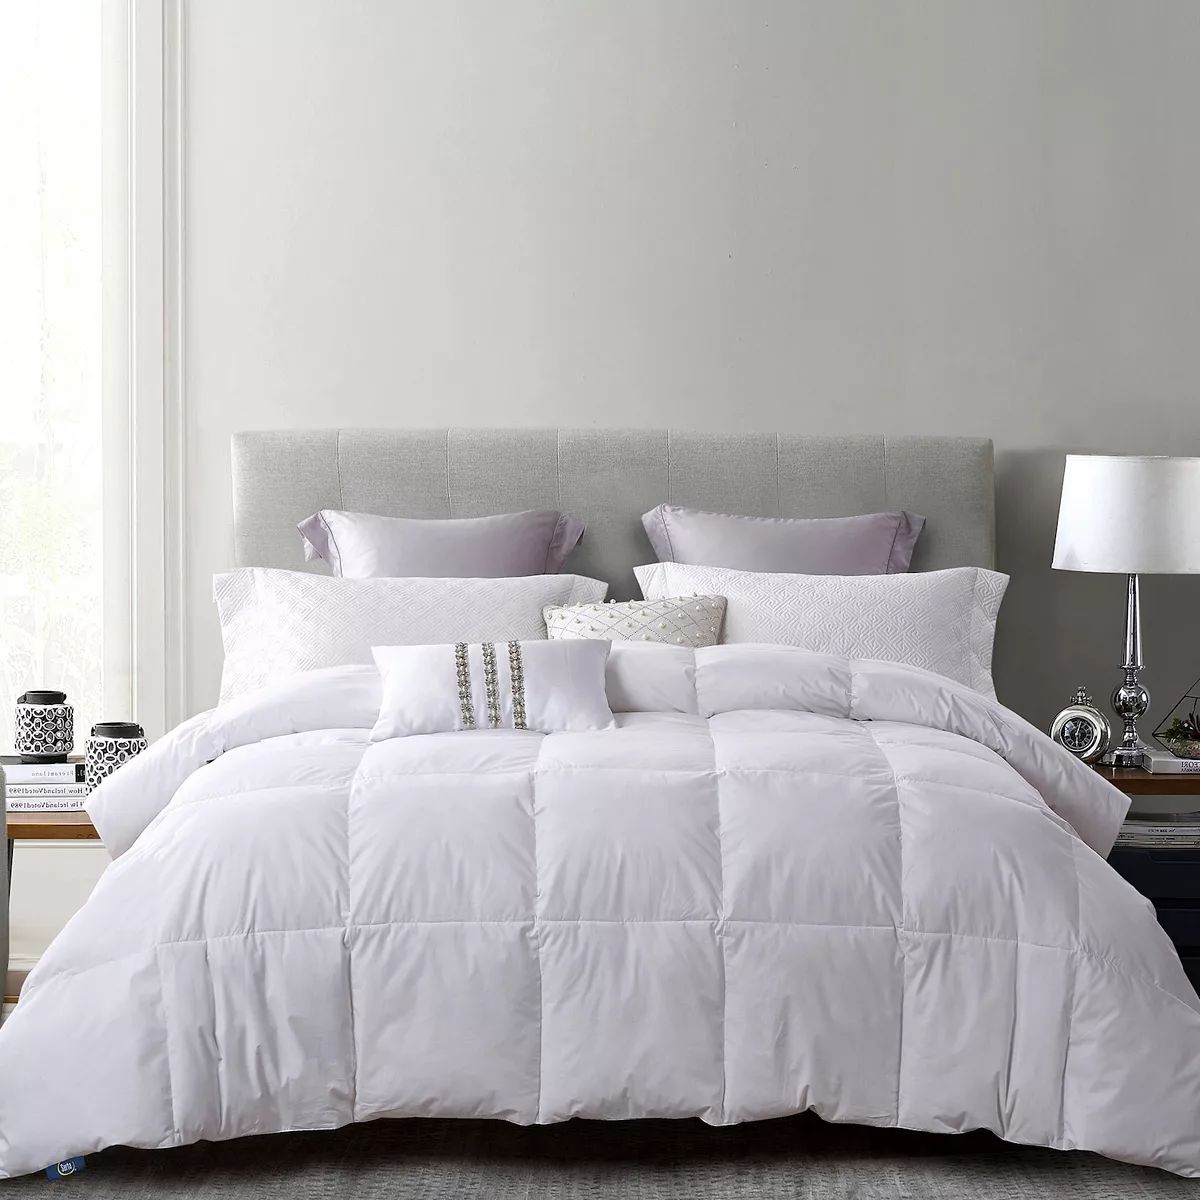 Serta® White Duck Feather & Down Comforter | Kohl's